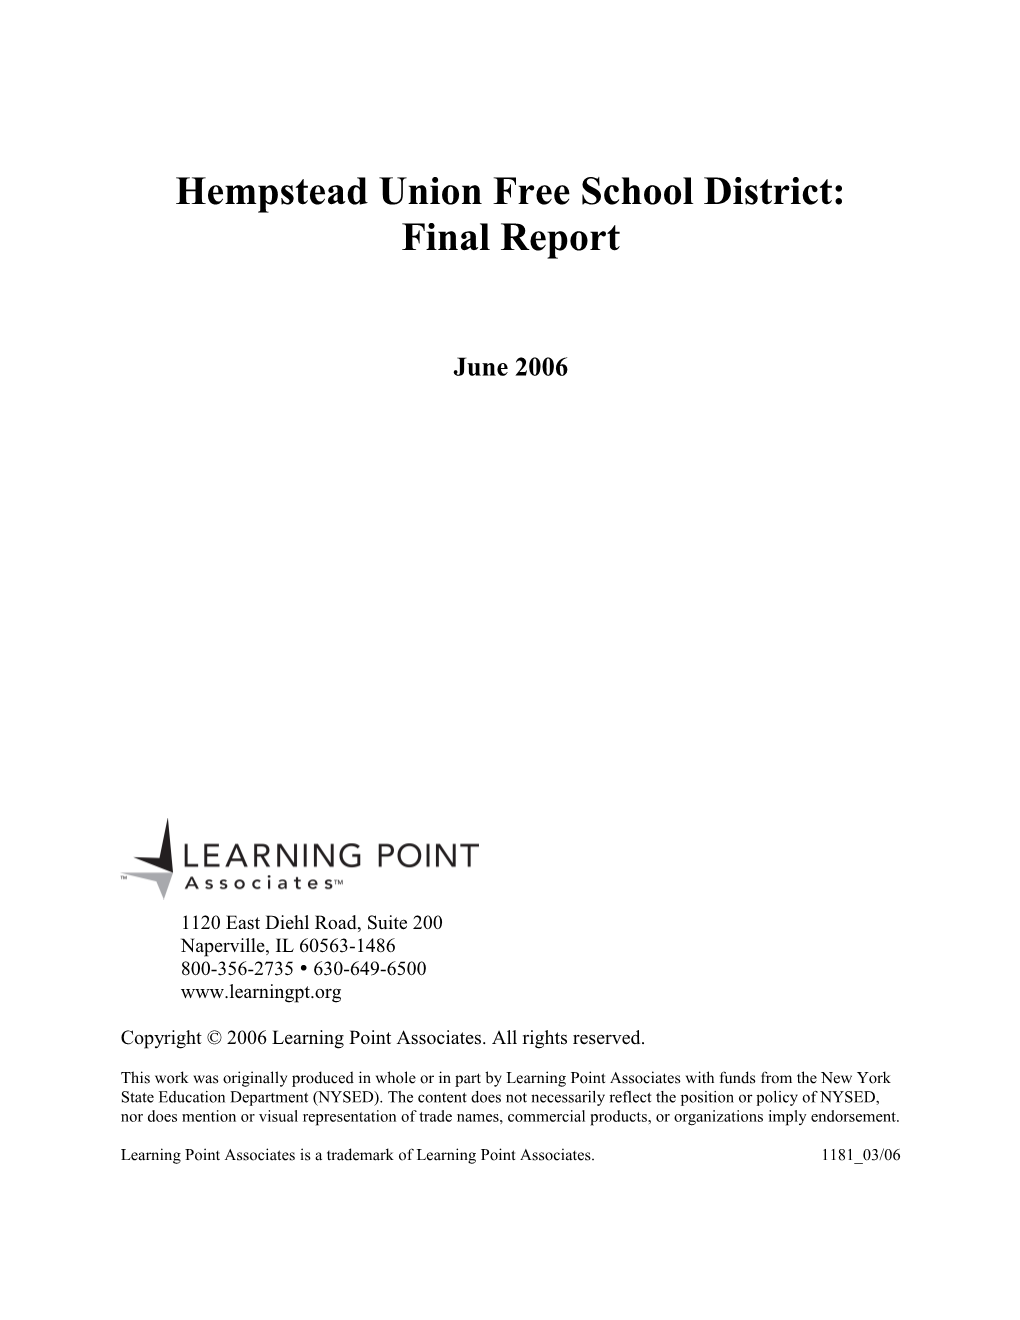 Hempstead Union Free School District: Final Report